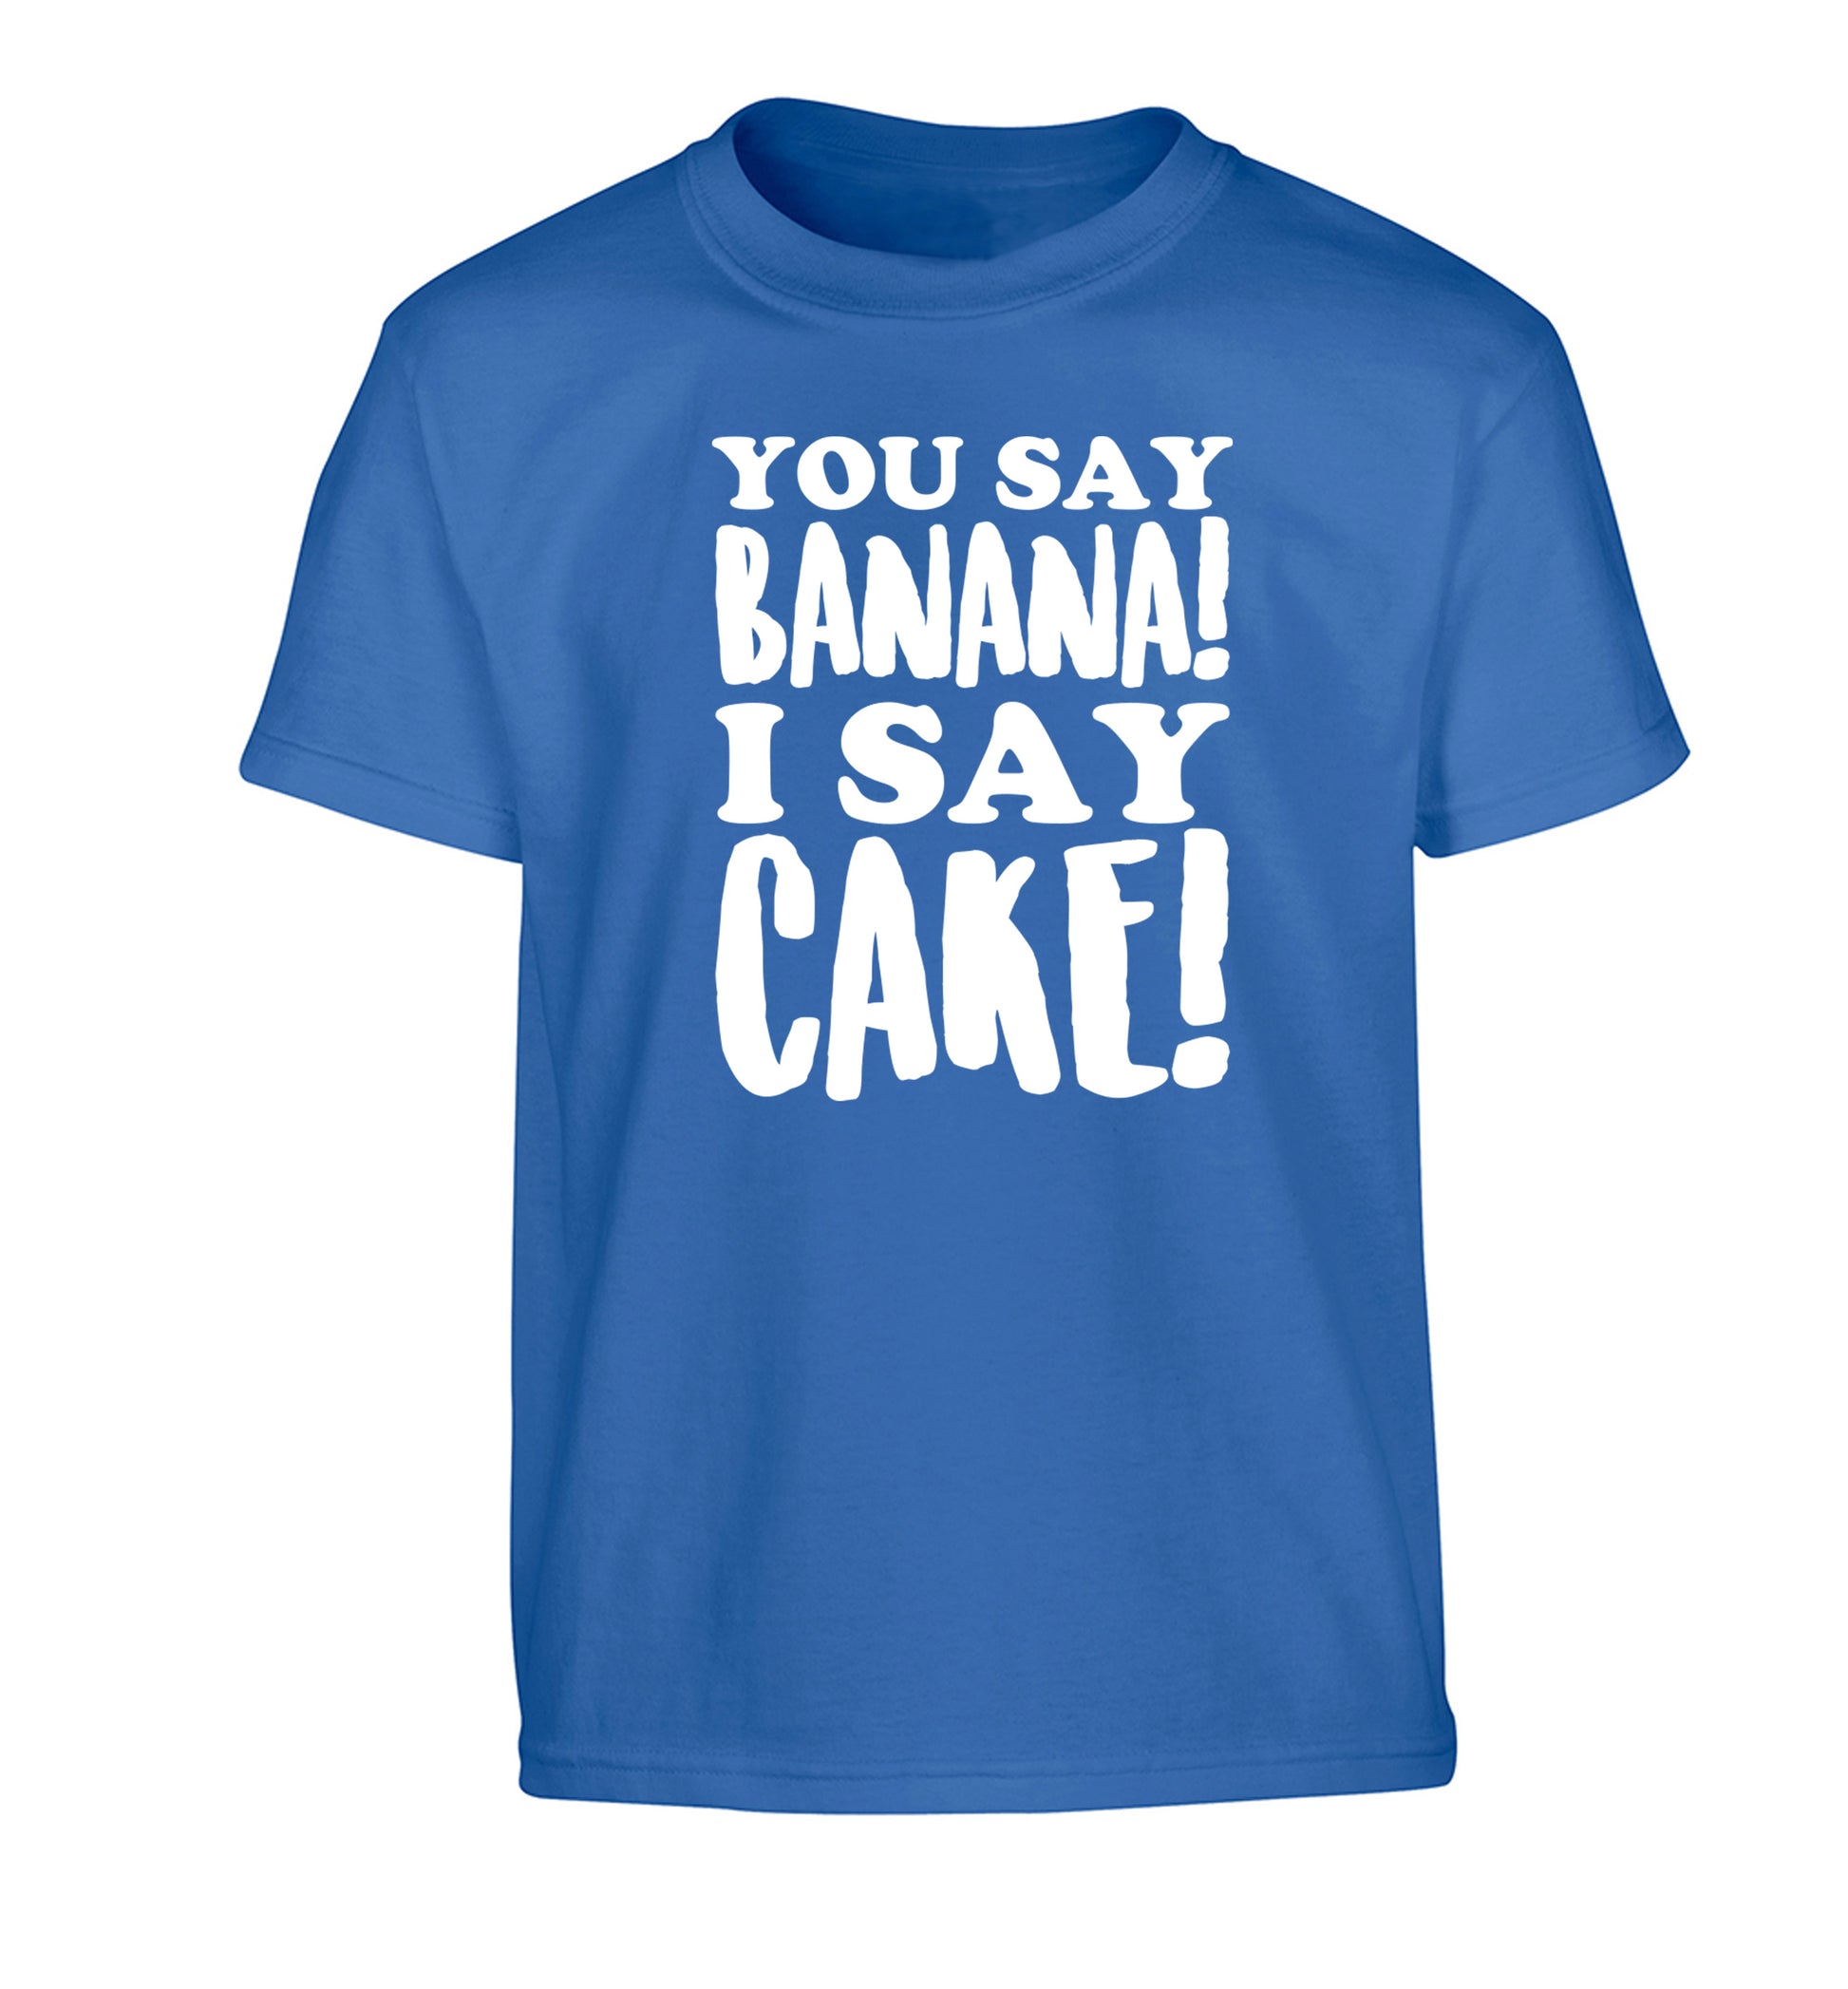 You say banana I say cake! Children's blue Tshirt 12-14 Years